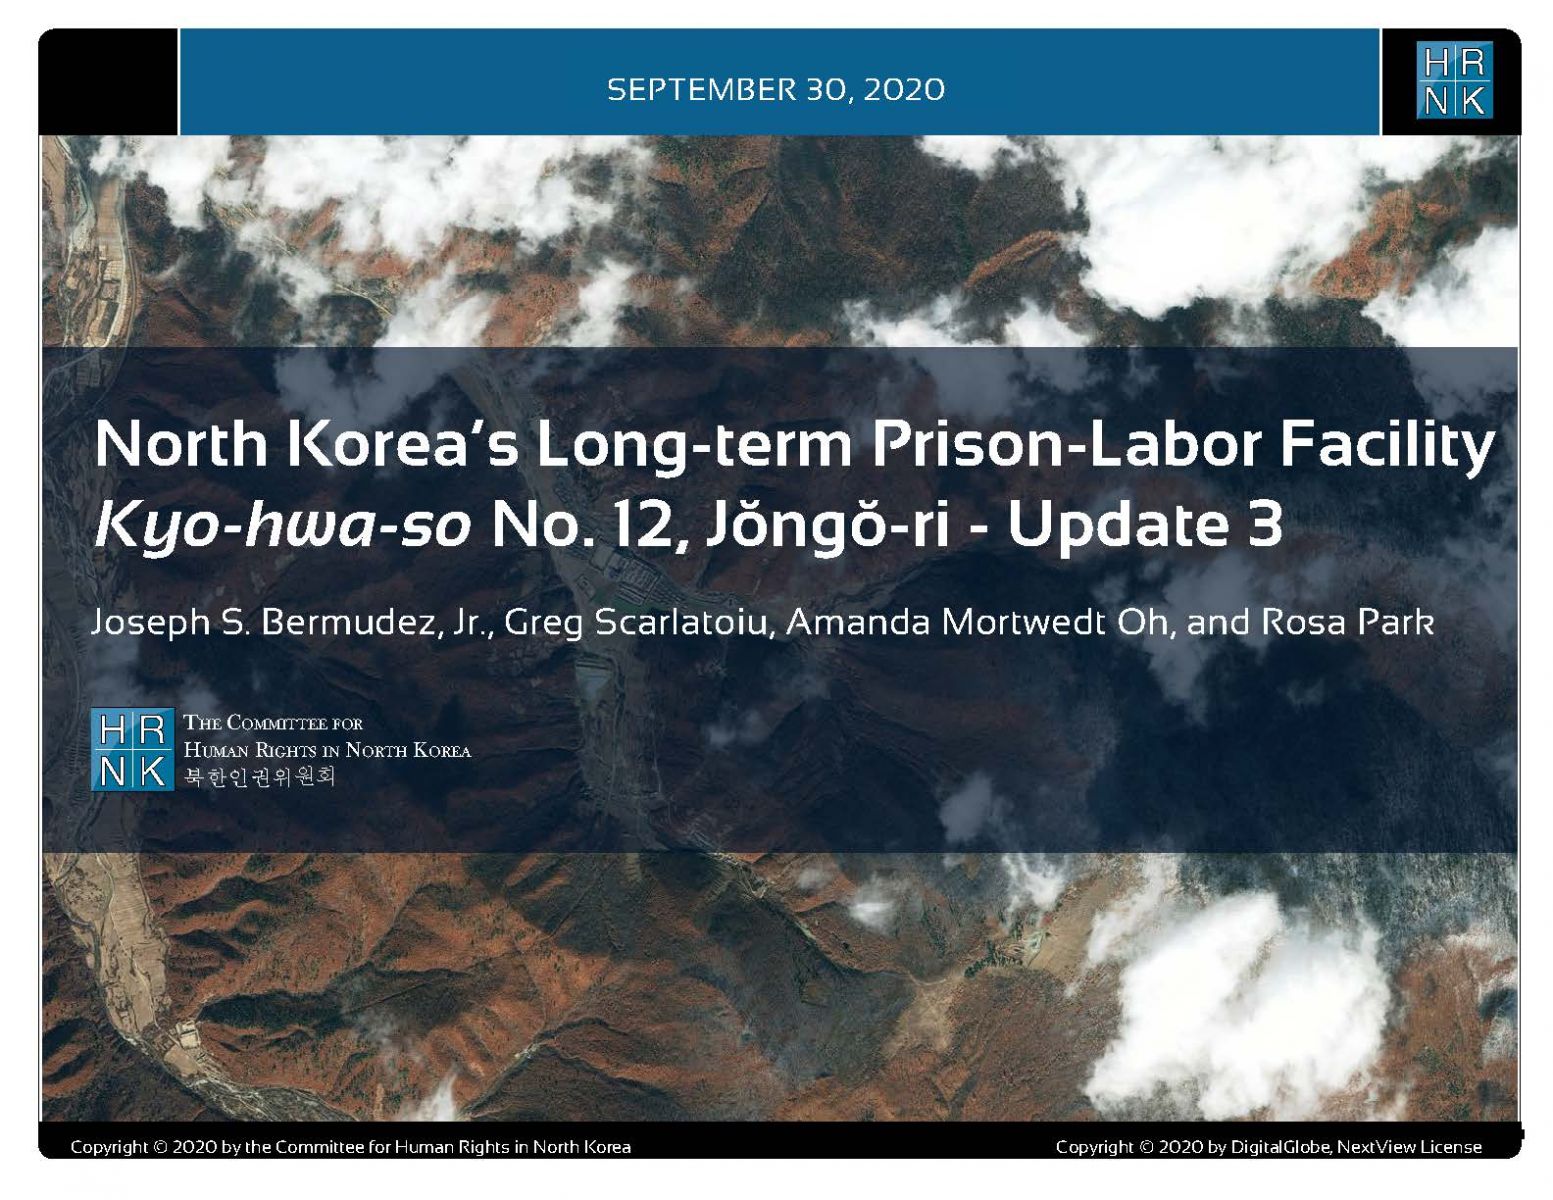 North Korea's Long-term Prison-Labor Facility Kyo-hwa-so No. 12, Jŏngŏ-ri - Update 3